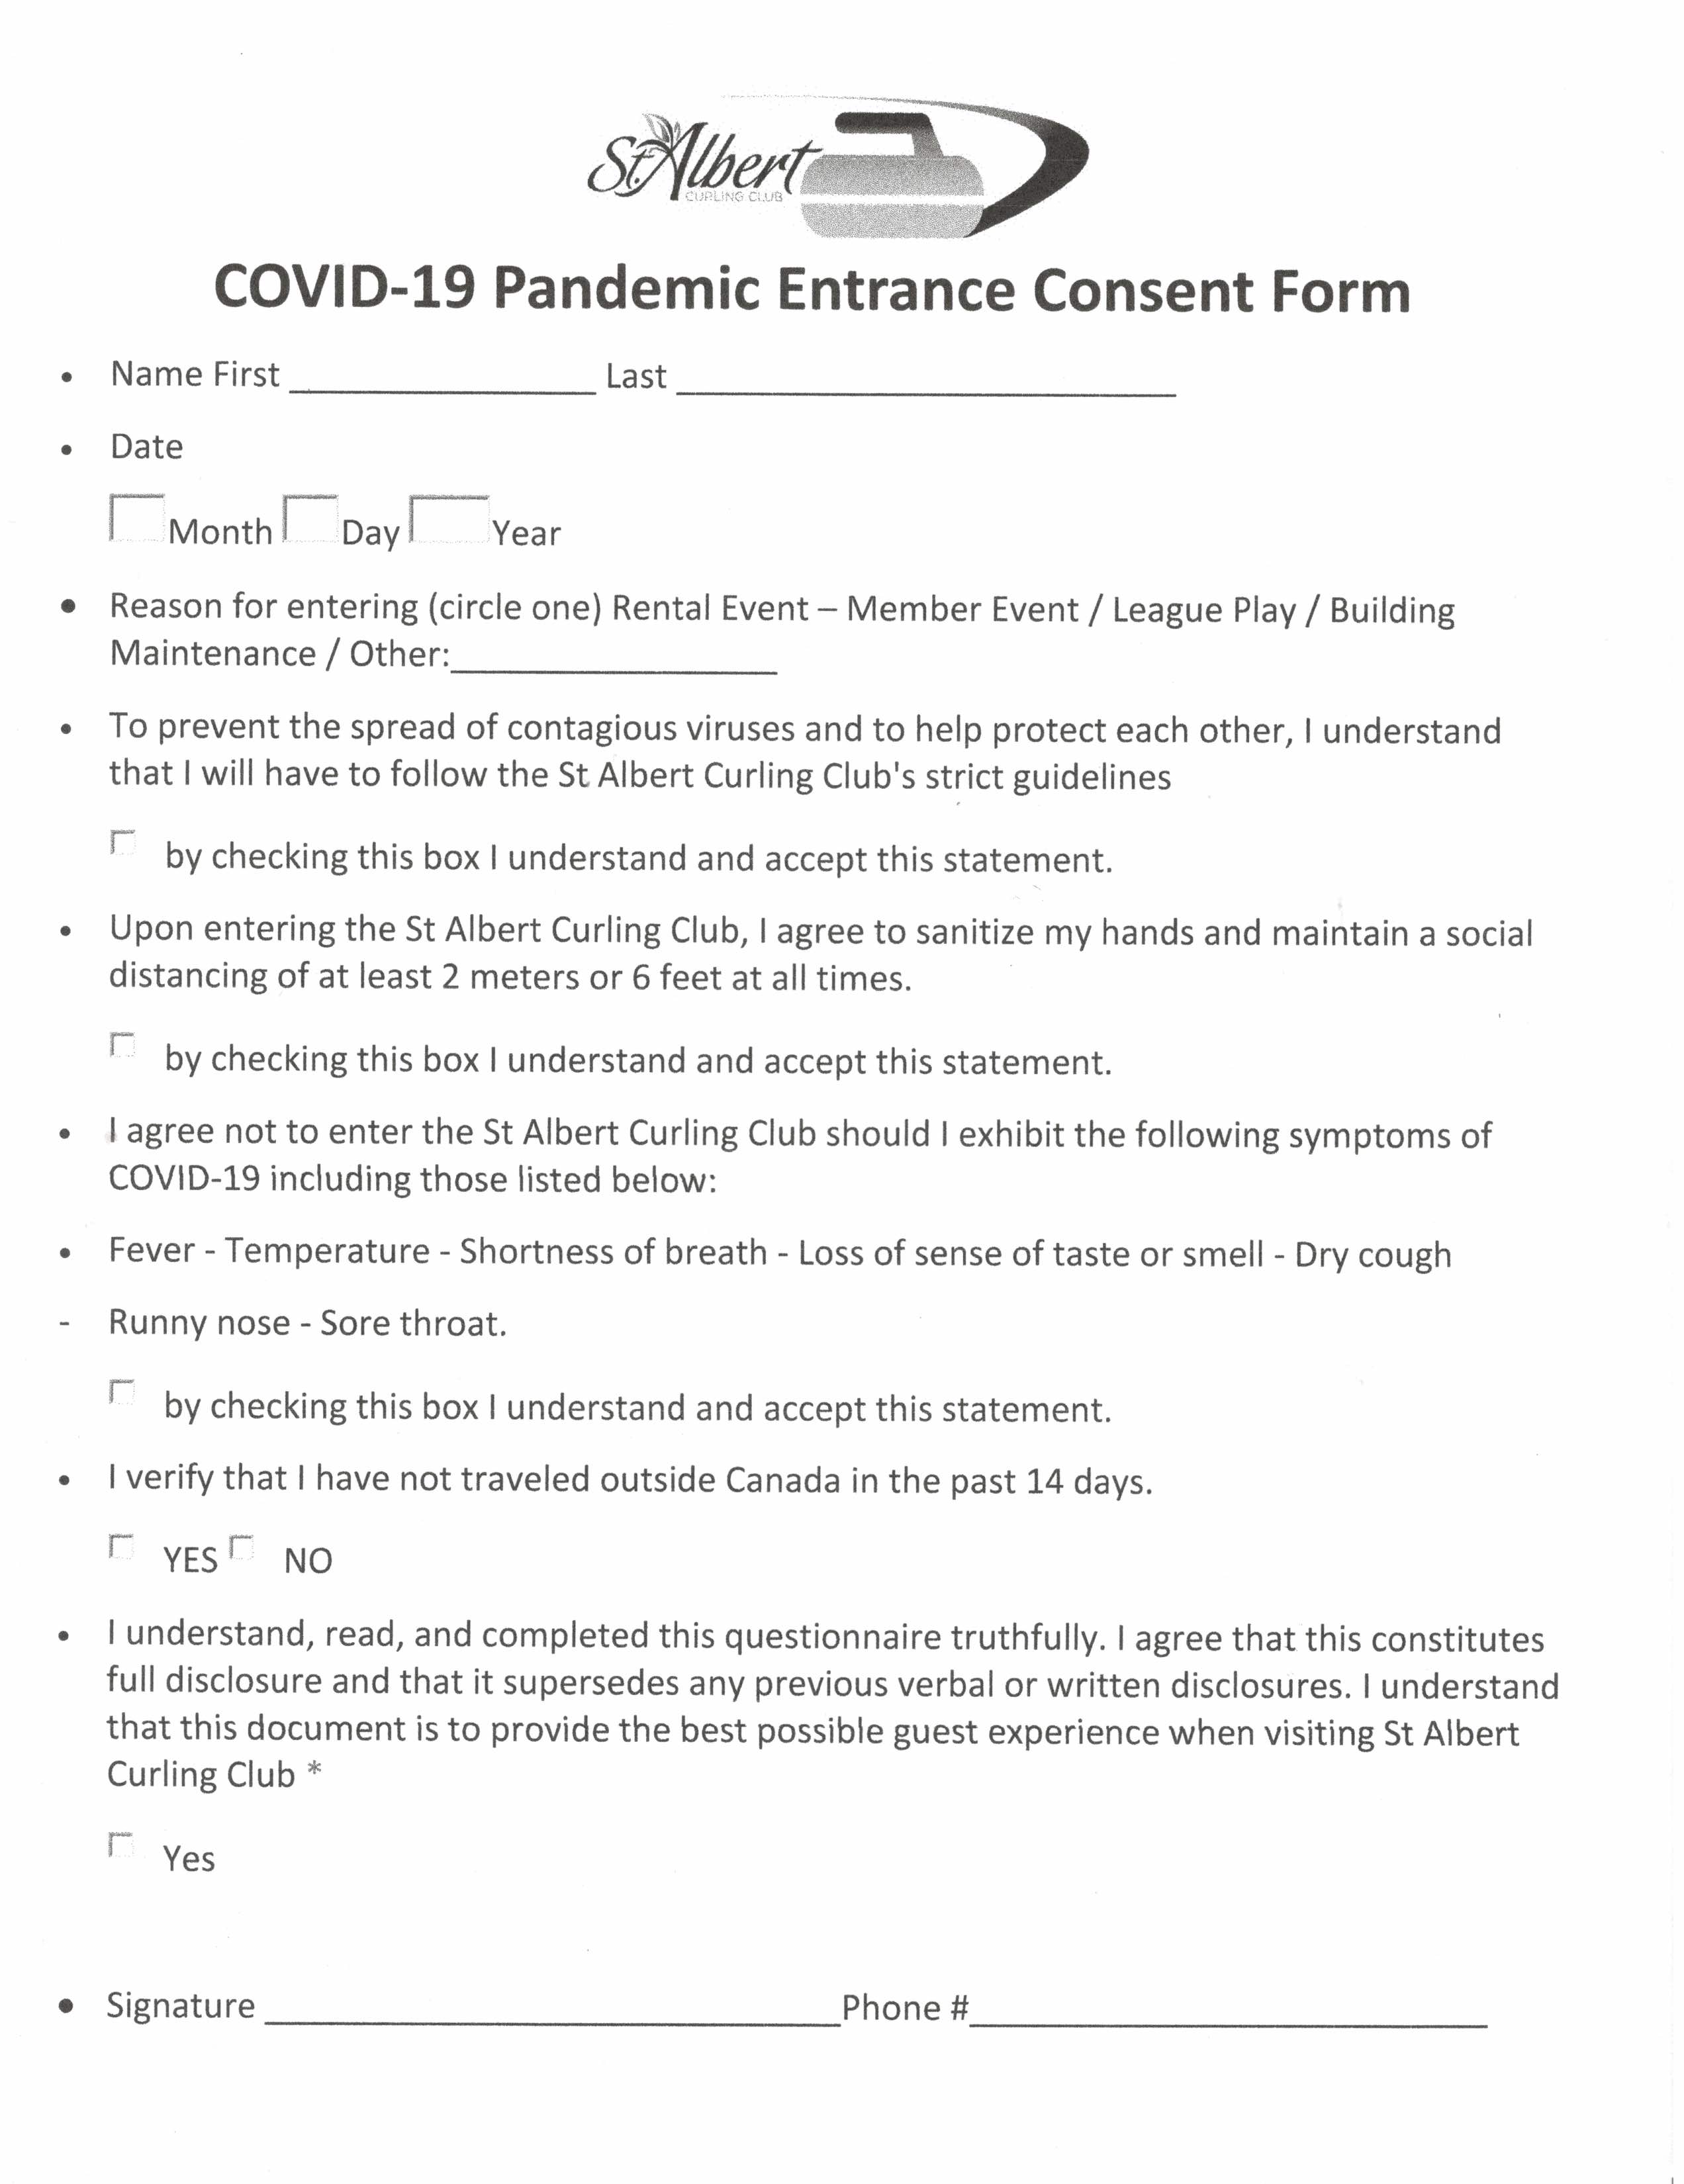 COVID Entrance Consent